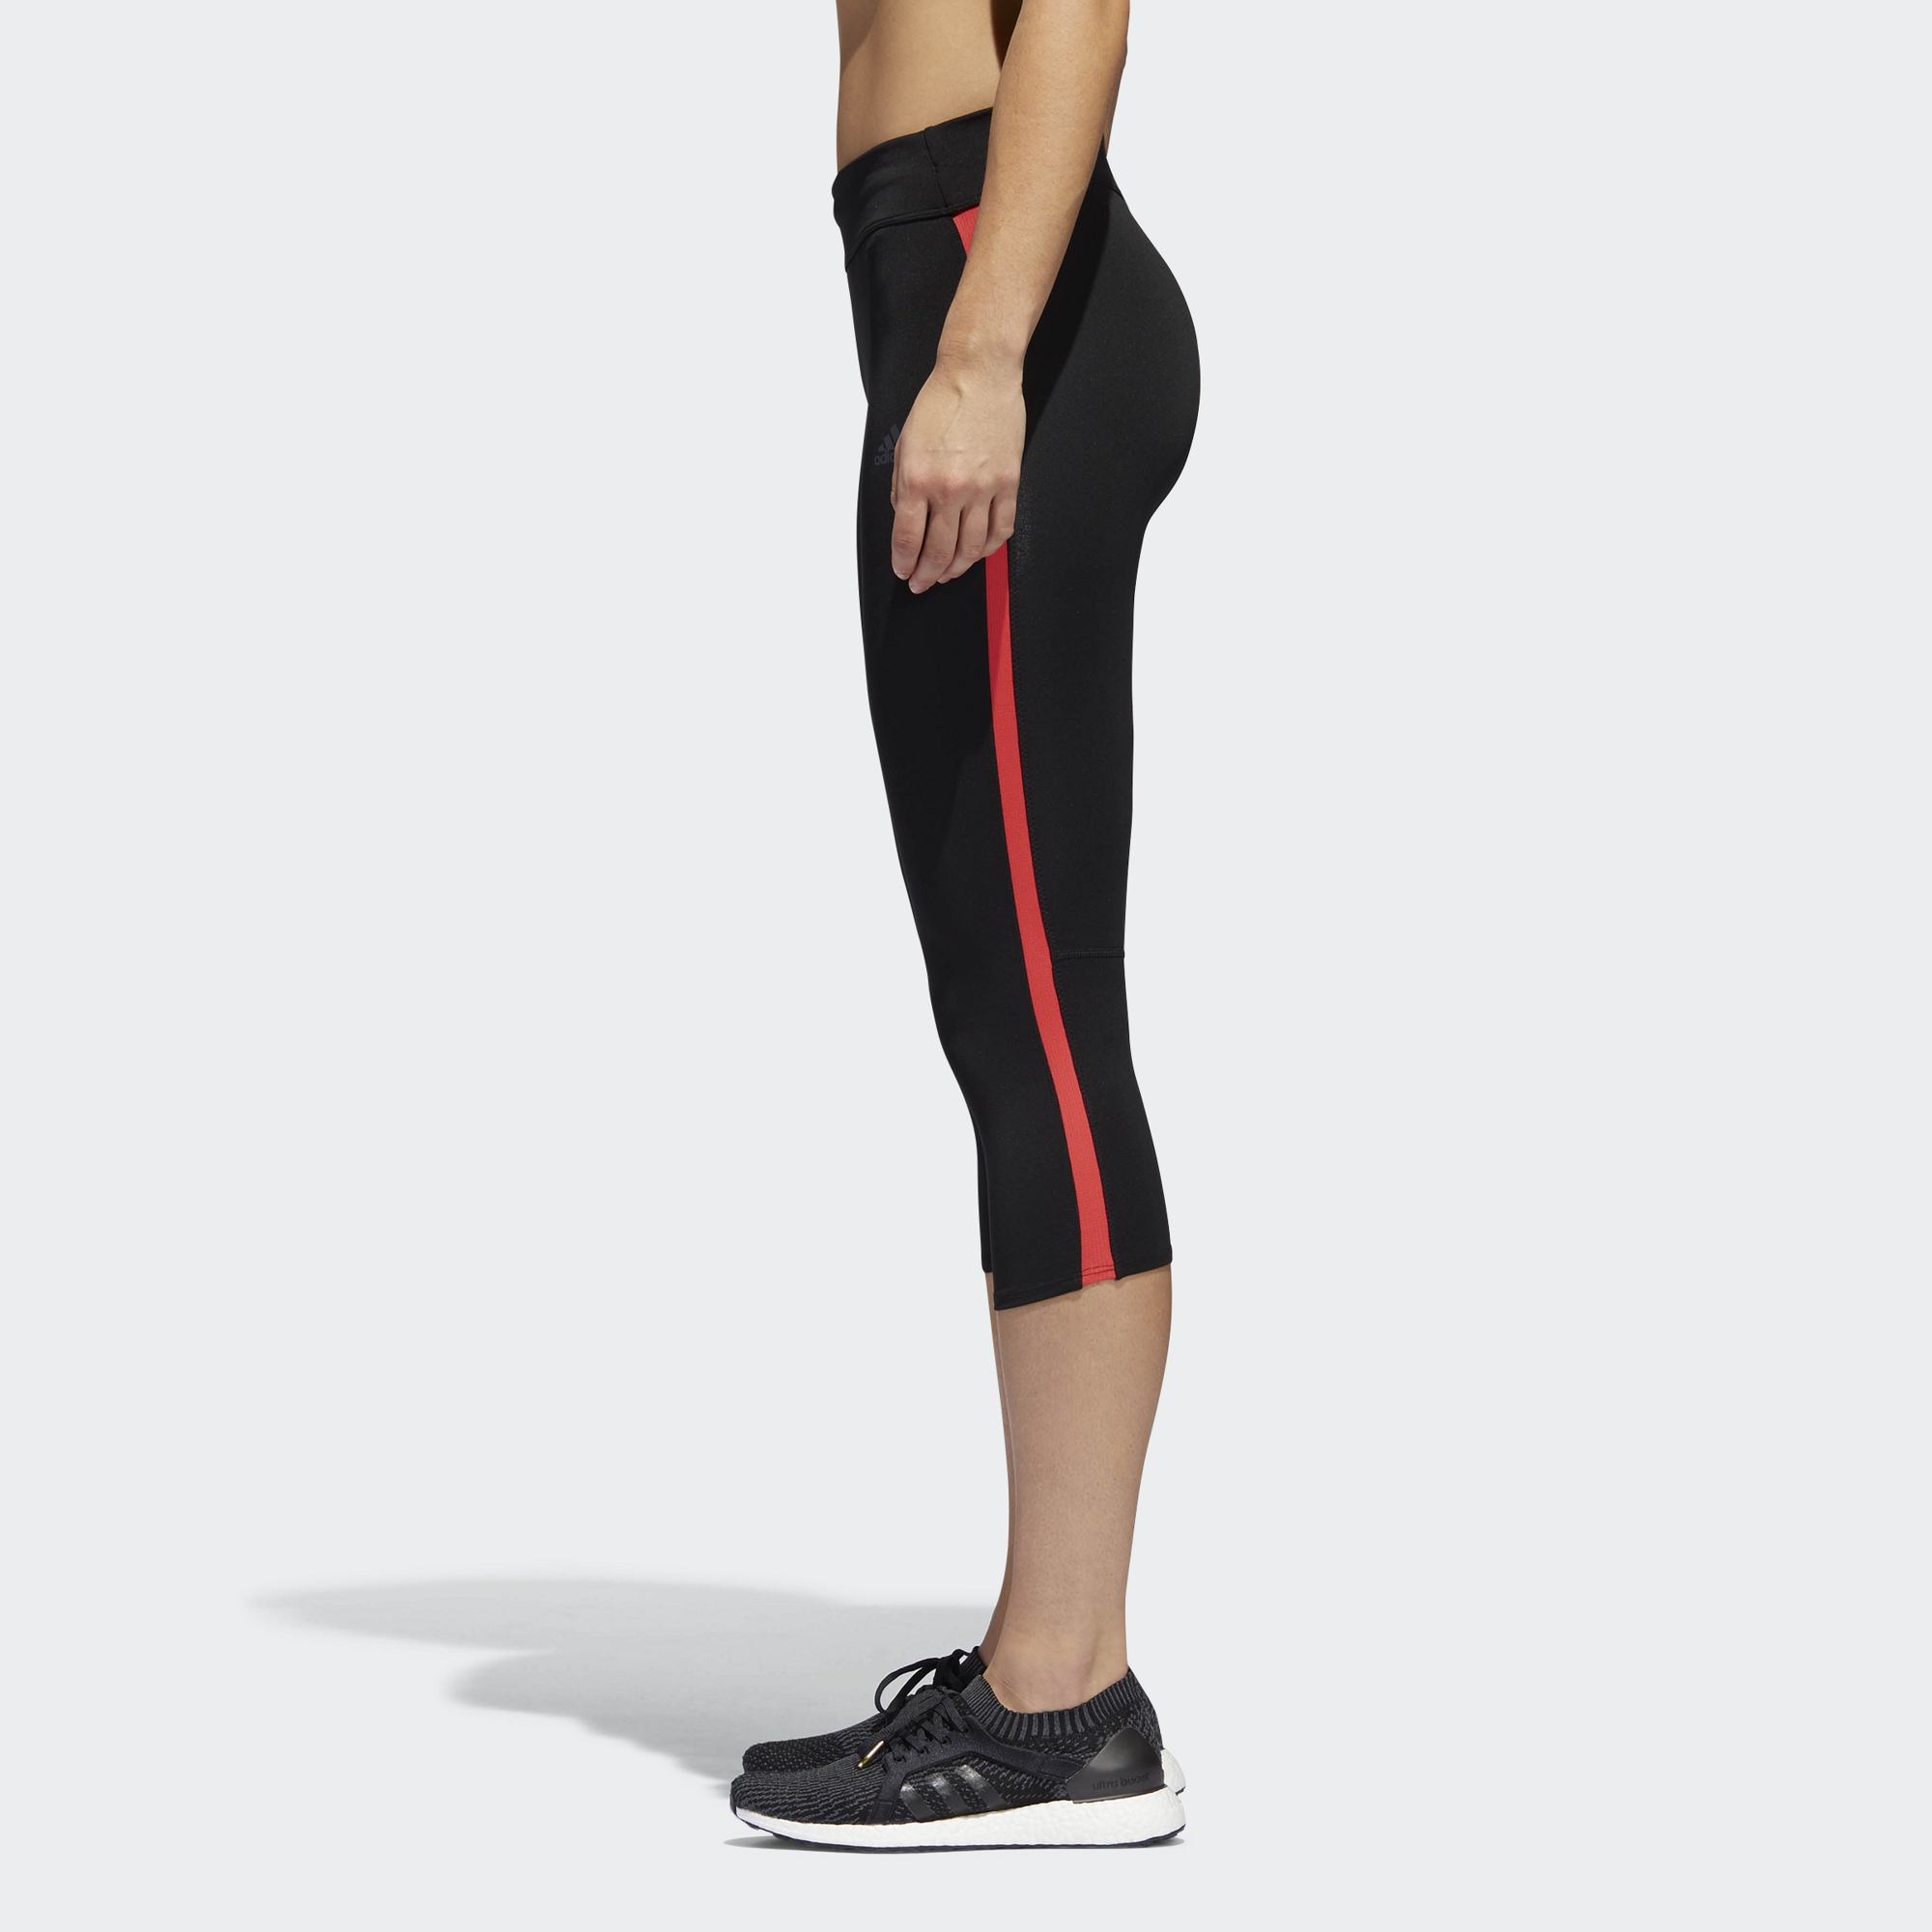 Women’s running 3/4 length tights